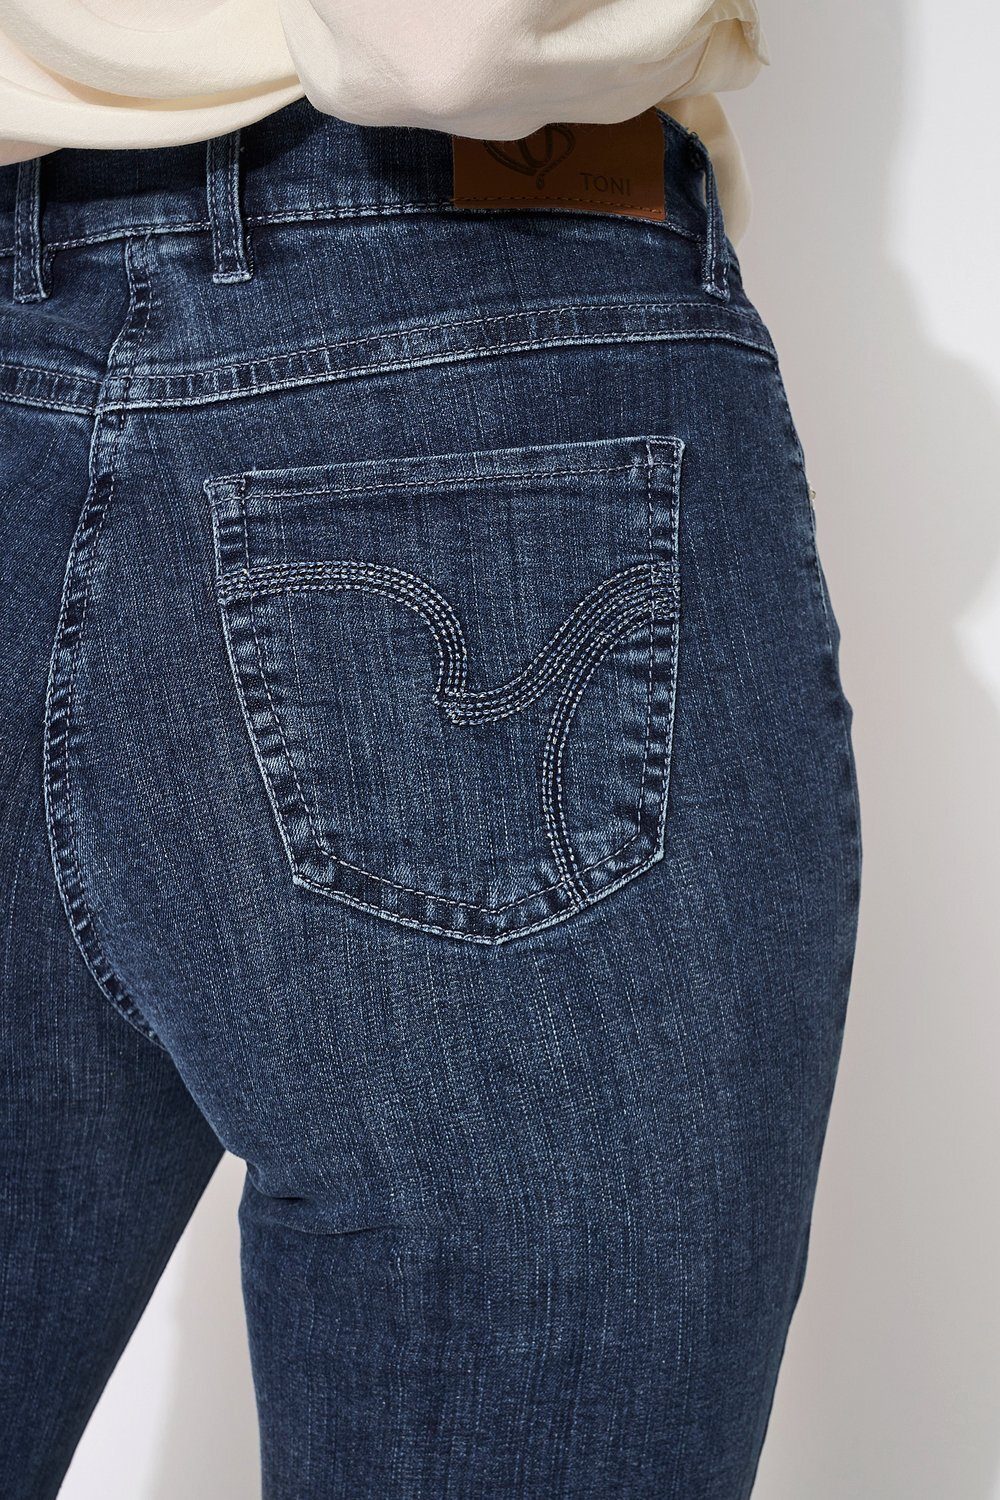 TONI 5-Pocket-Jeans Po und Shaping-Effekt mittelblau Perfect Bauch - Shape an mit 502